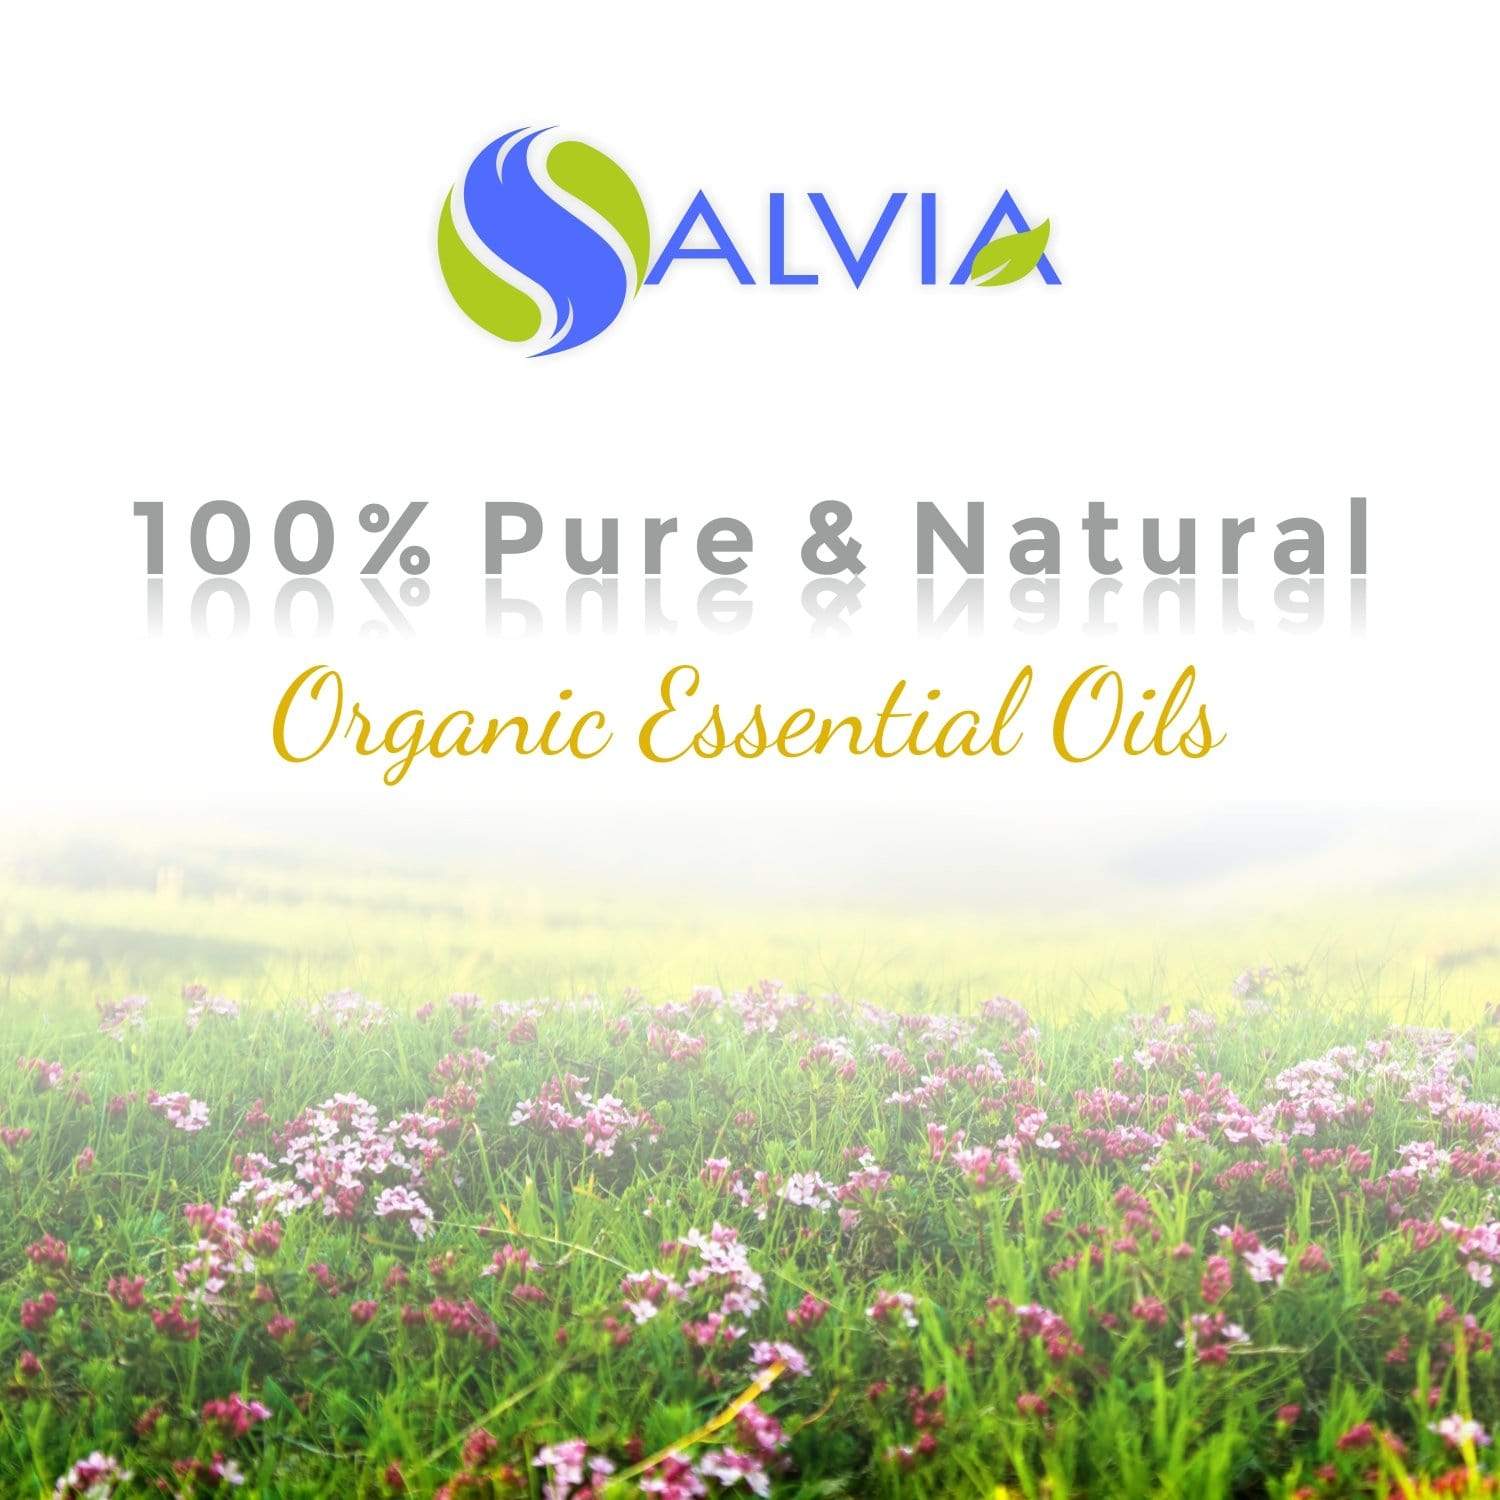 Salvia Organic Essential Oils Organic Cypress Essential Oil